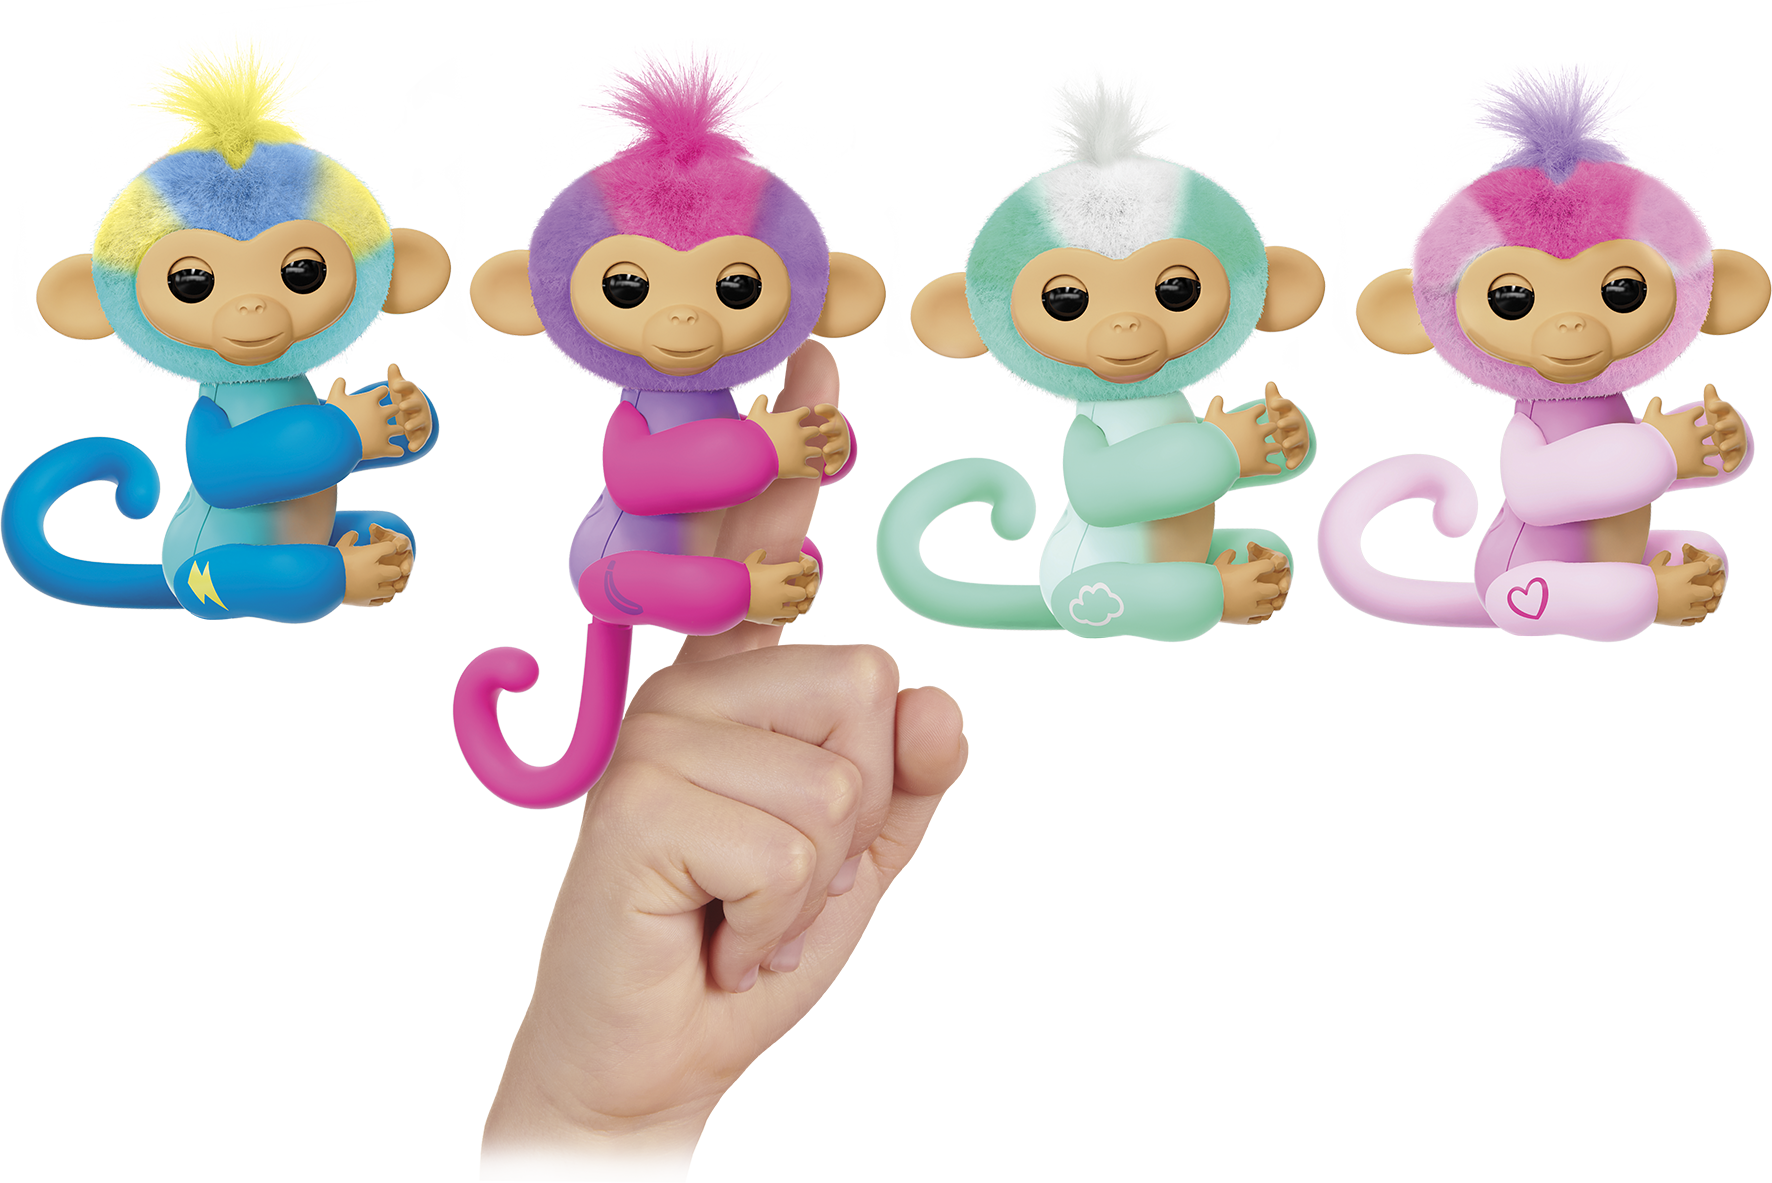 LANSAY- HARMONY - Petit singe interactif - FINGERLINGS - figurine